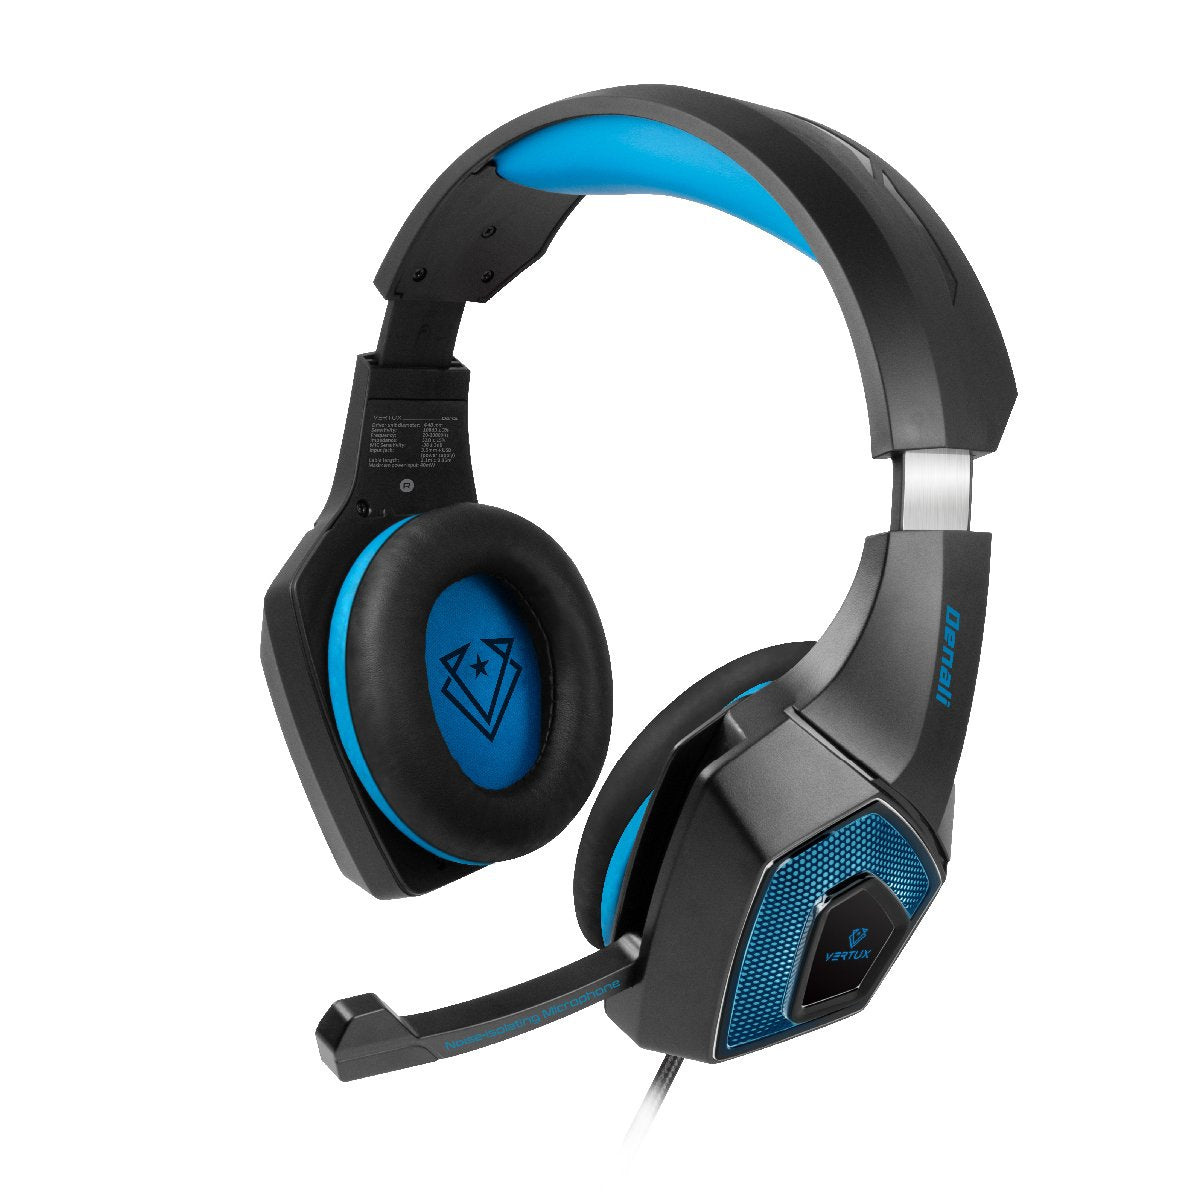 Vertux Denali High Fidelity Surround Sound Gaming Headset (Blue)